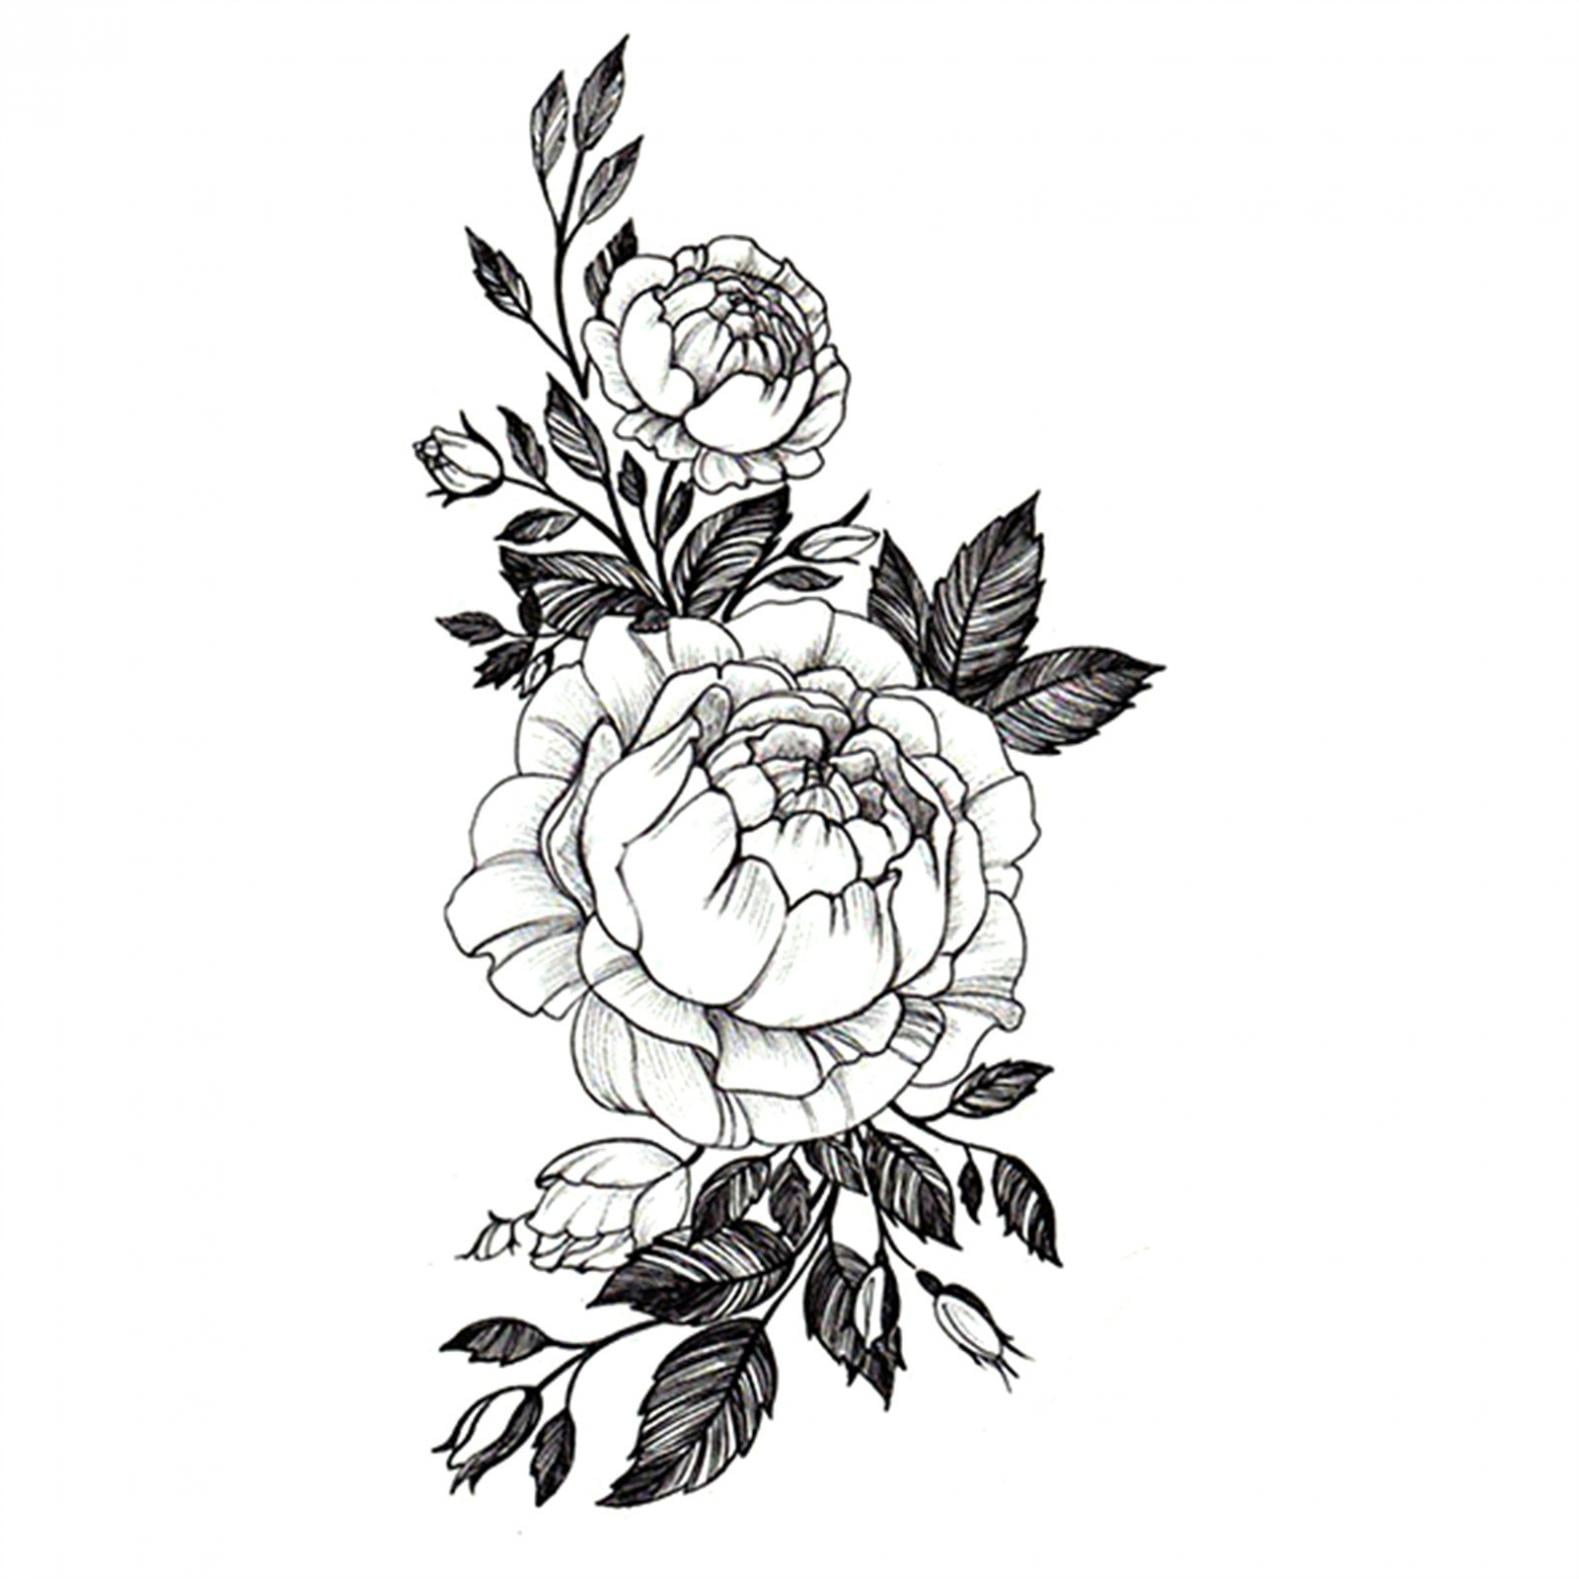 Azalea Flower Doodle Art Azalea Zentangle Line Drawing Azalea Flower  Tattoo Black and White Azalea Flower Tattoos for an Arm Stock Vector   Illustration of doodle tatto 278312996